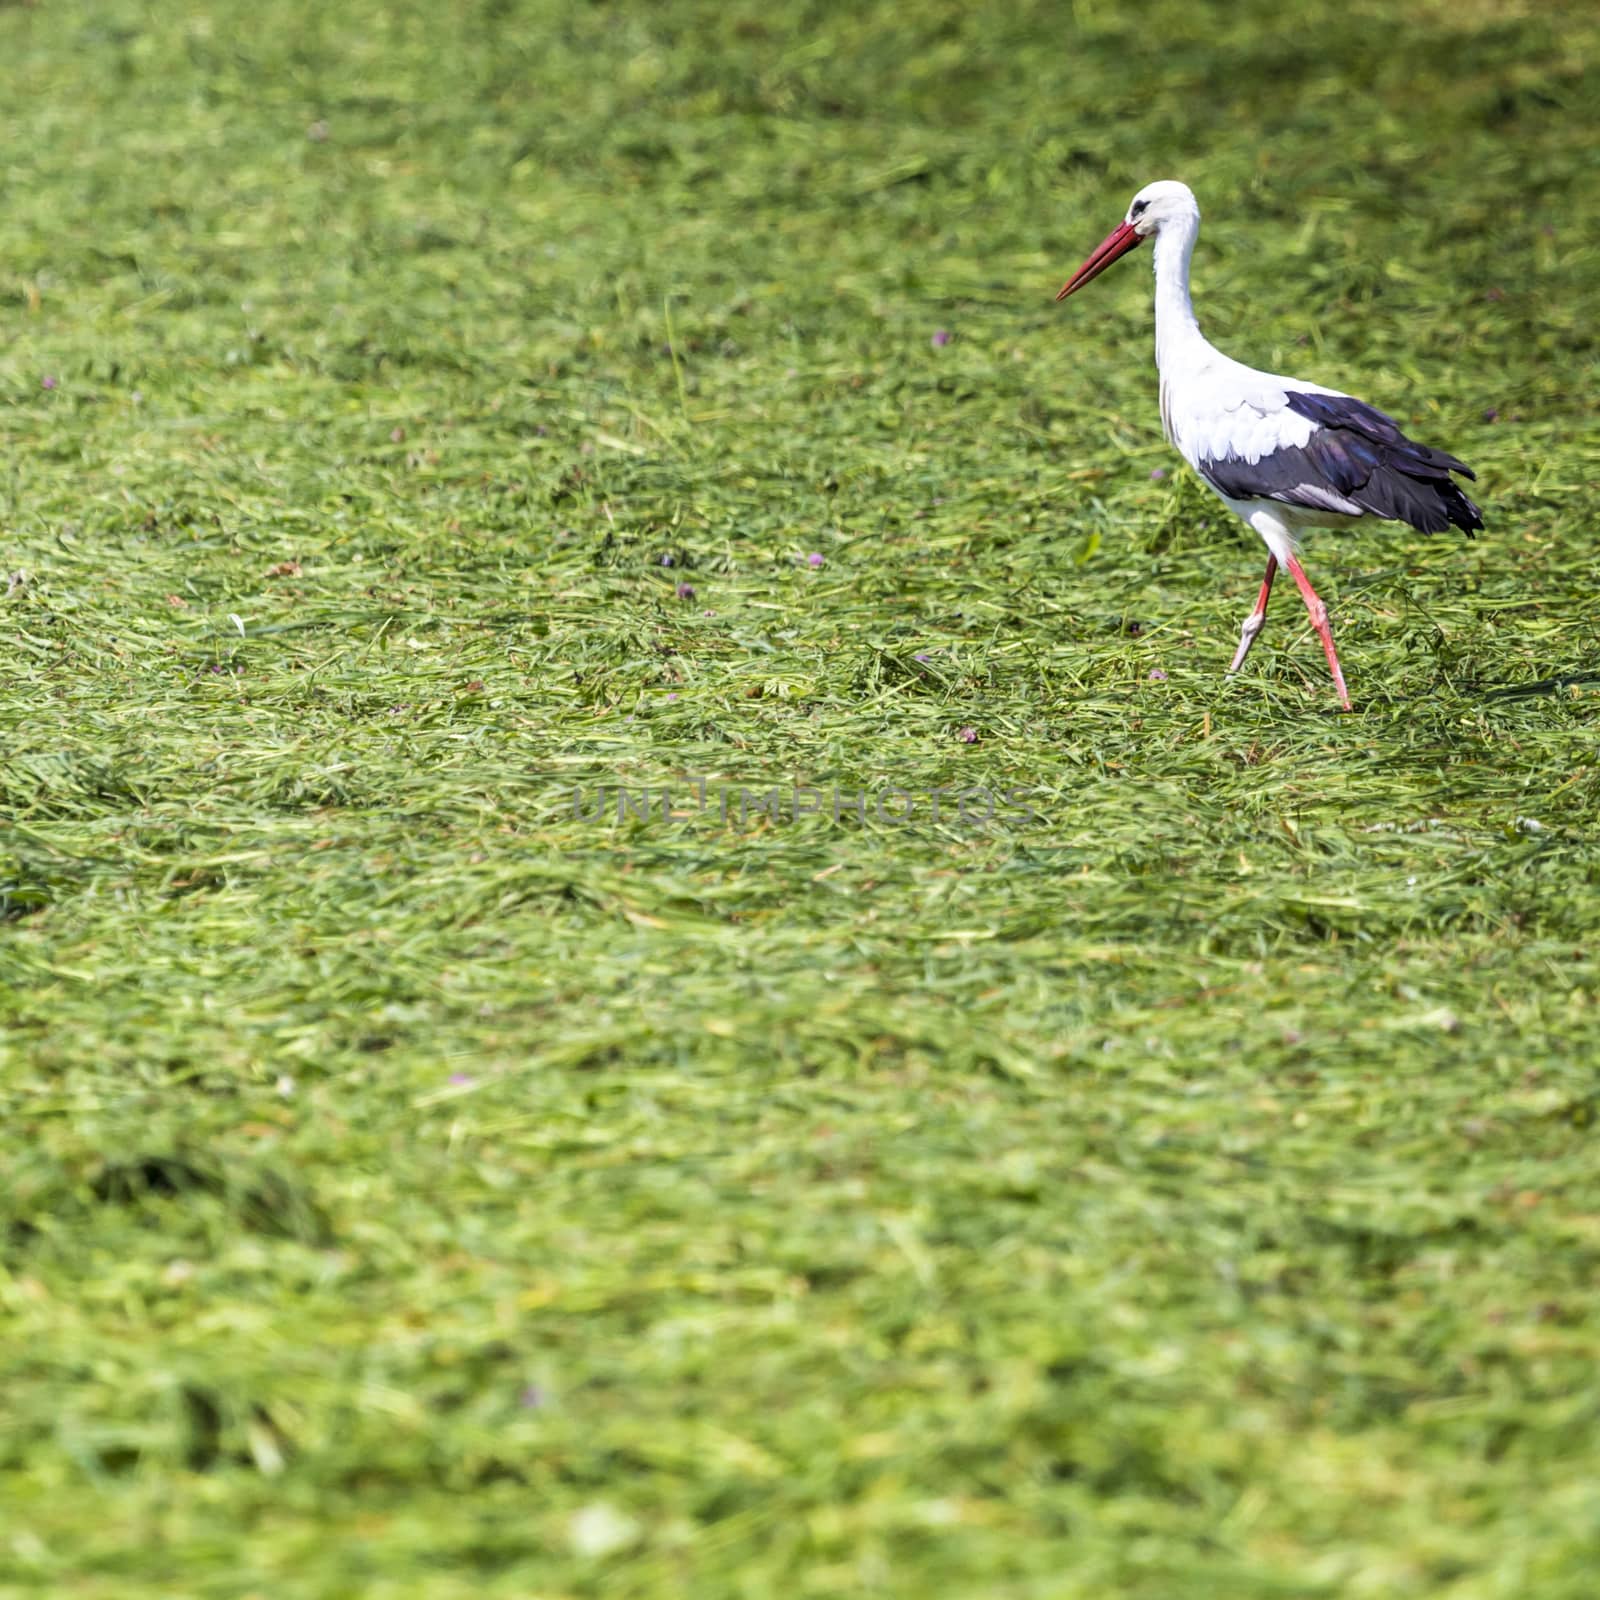 Stork running around the grass field